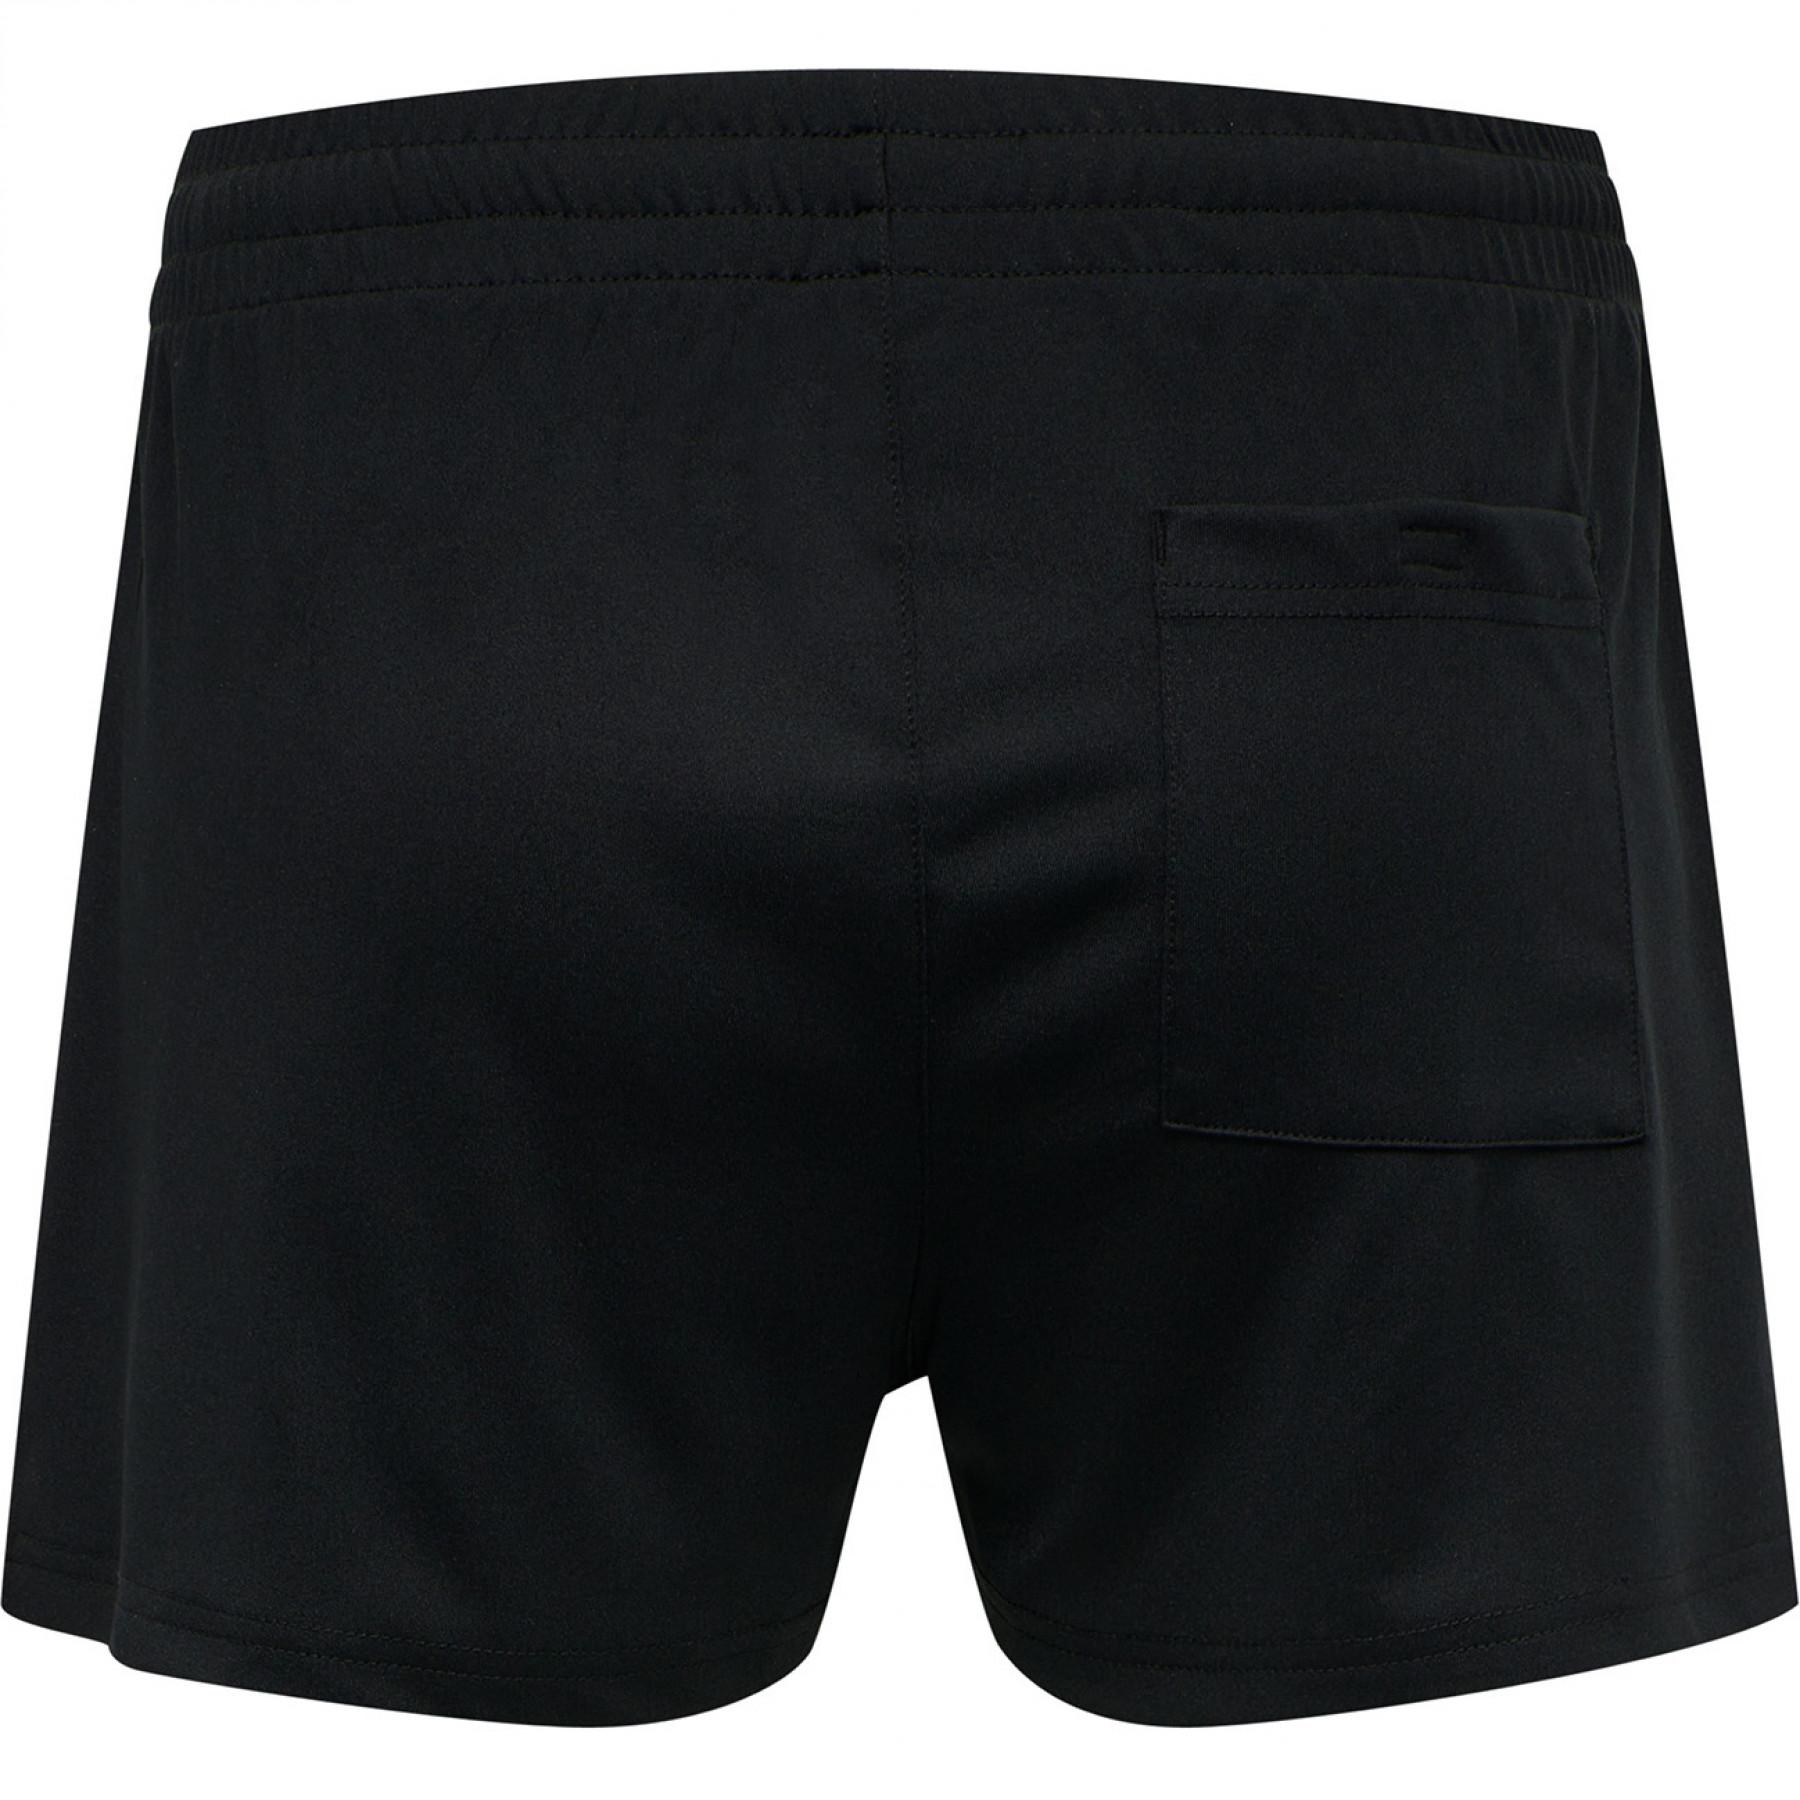 Women's shorts Hummel hmlreferee chevron